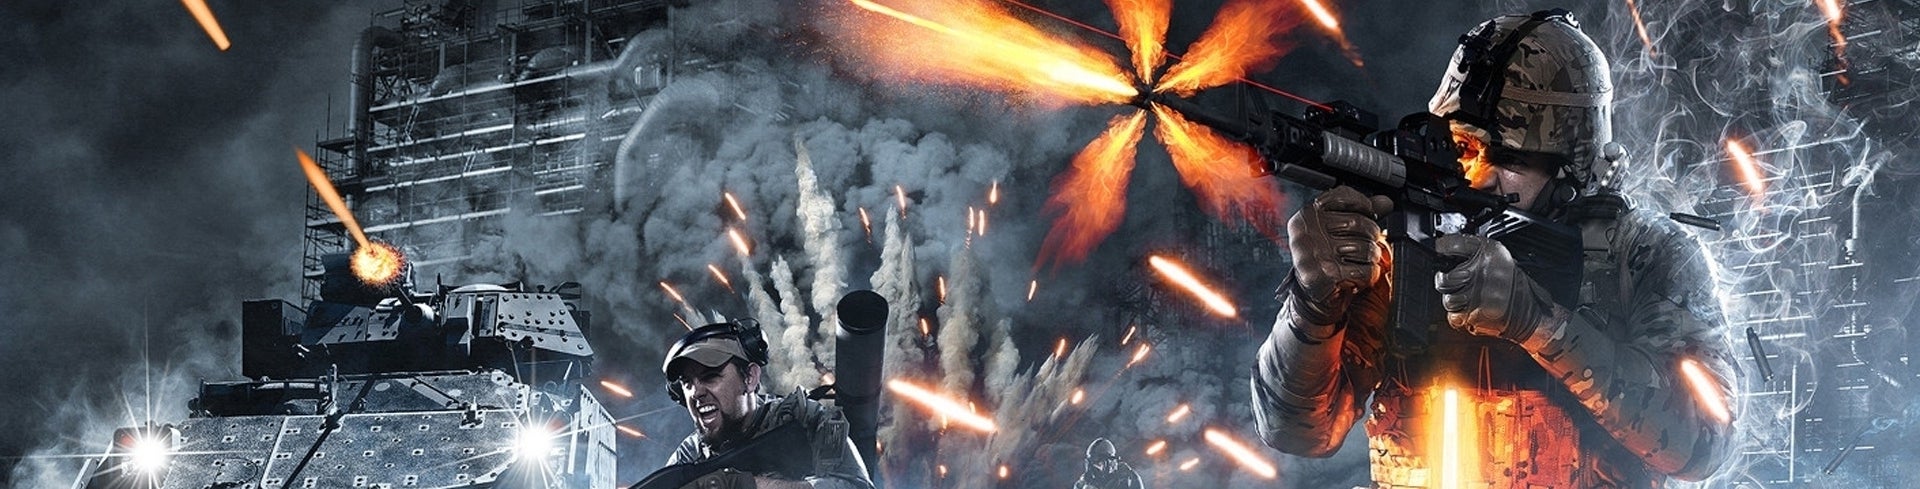 Image for RECENZE Battlefield 4